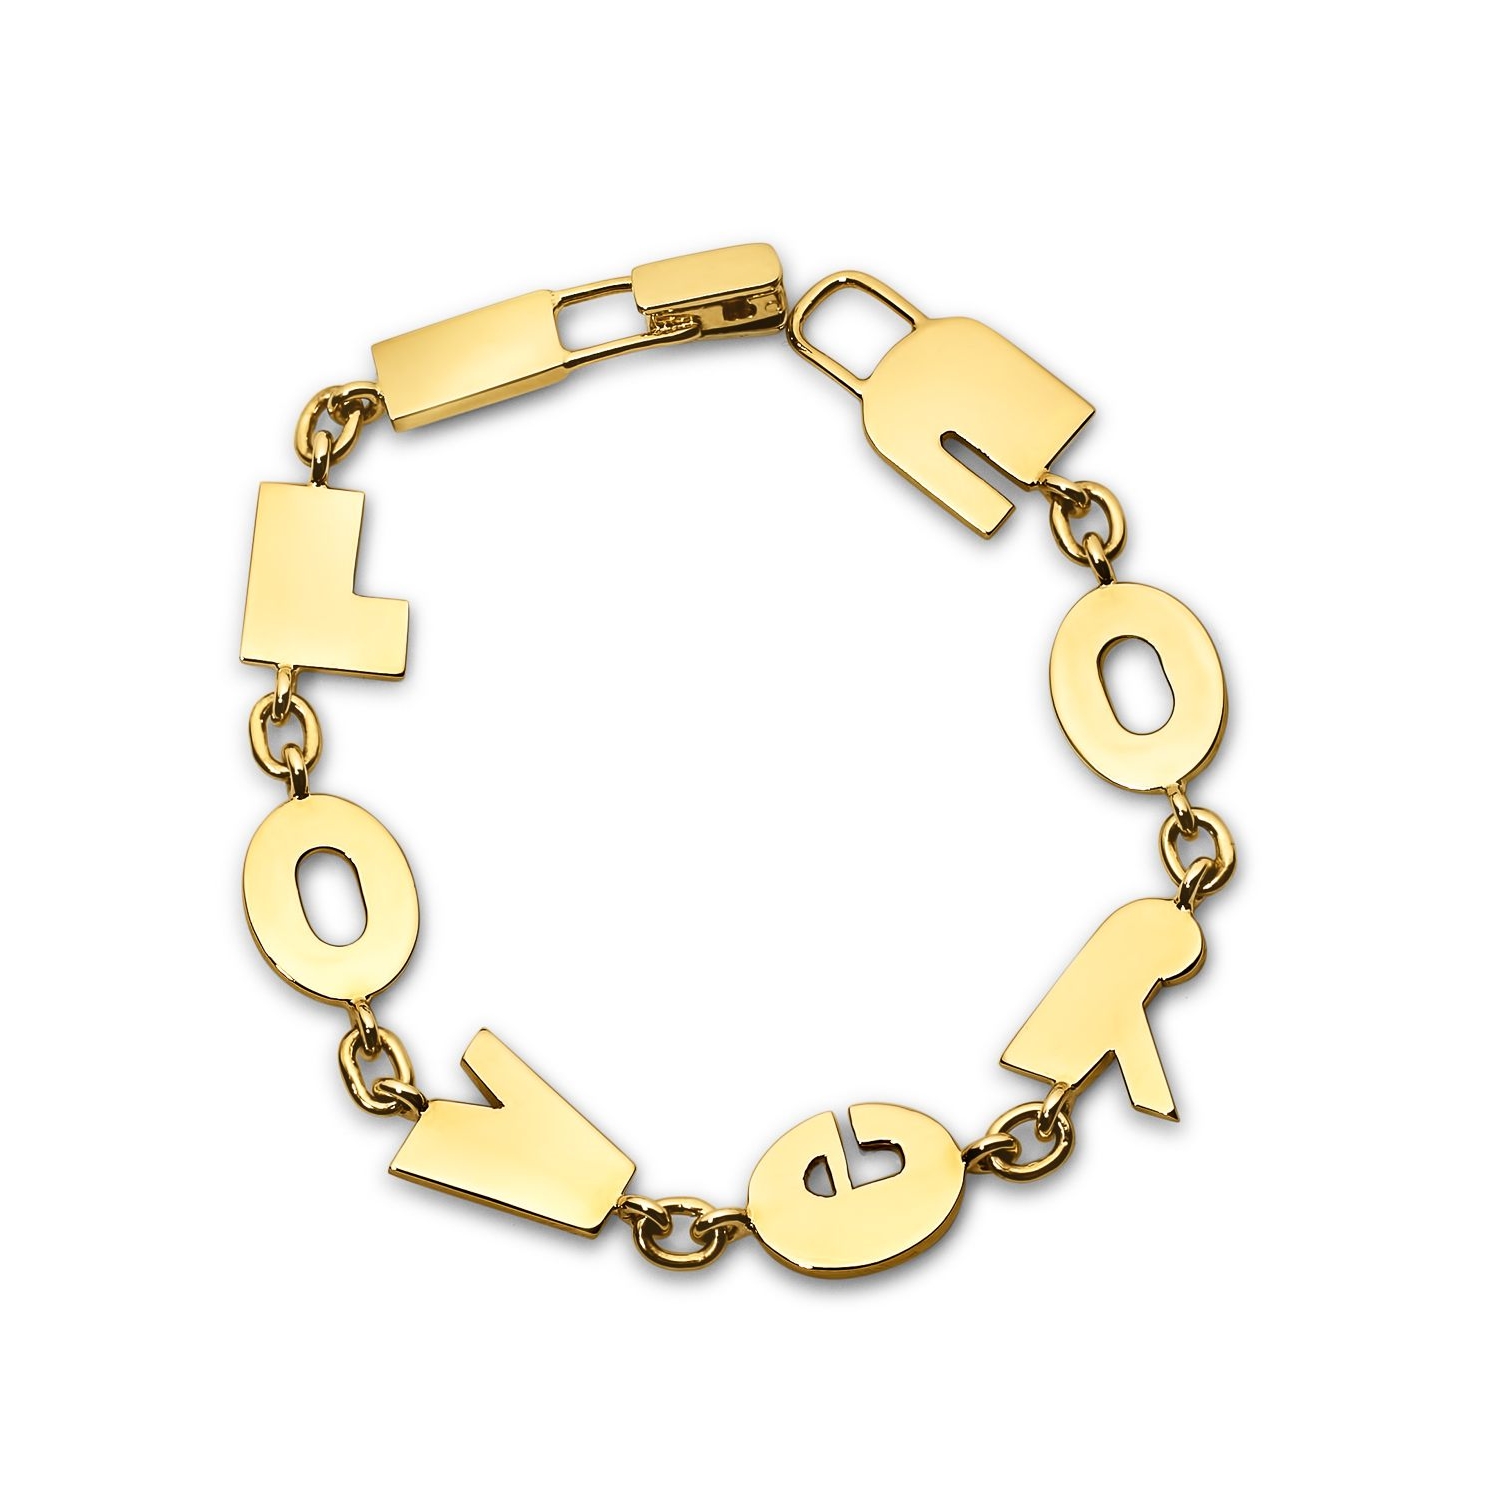 Cartier Bracelet Size 20 on Sale - www.edoc.com.vn 1694735512